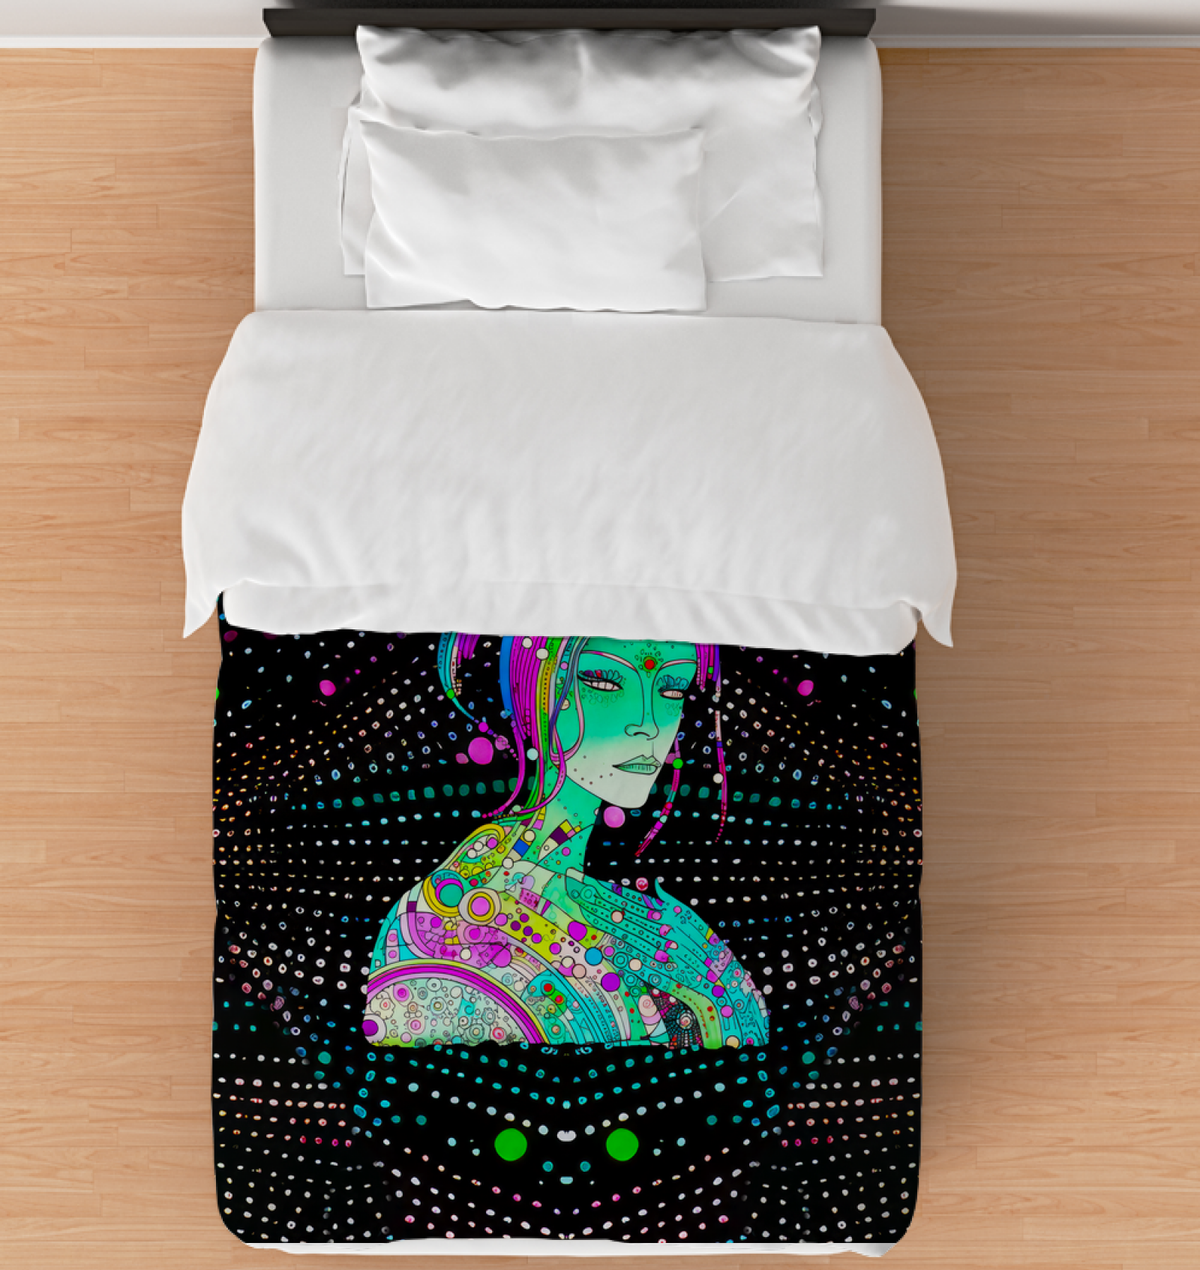 Peony Paradise Comforter showcasing its vibrant floral design on a plush bedding setup.